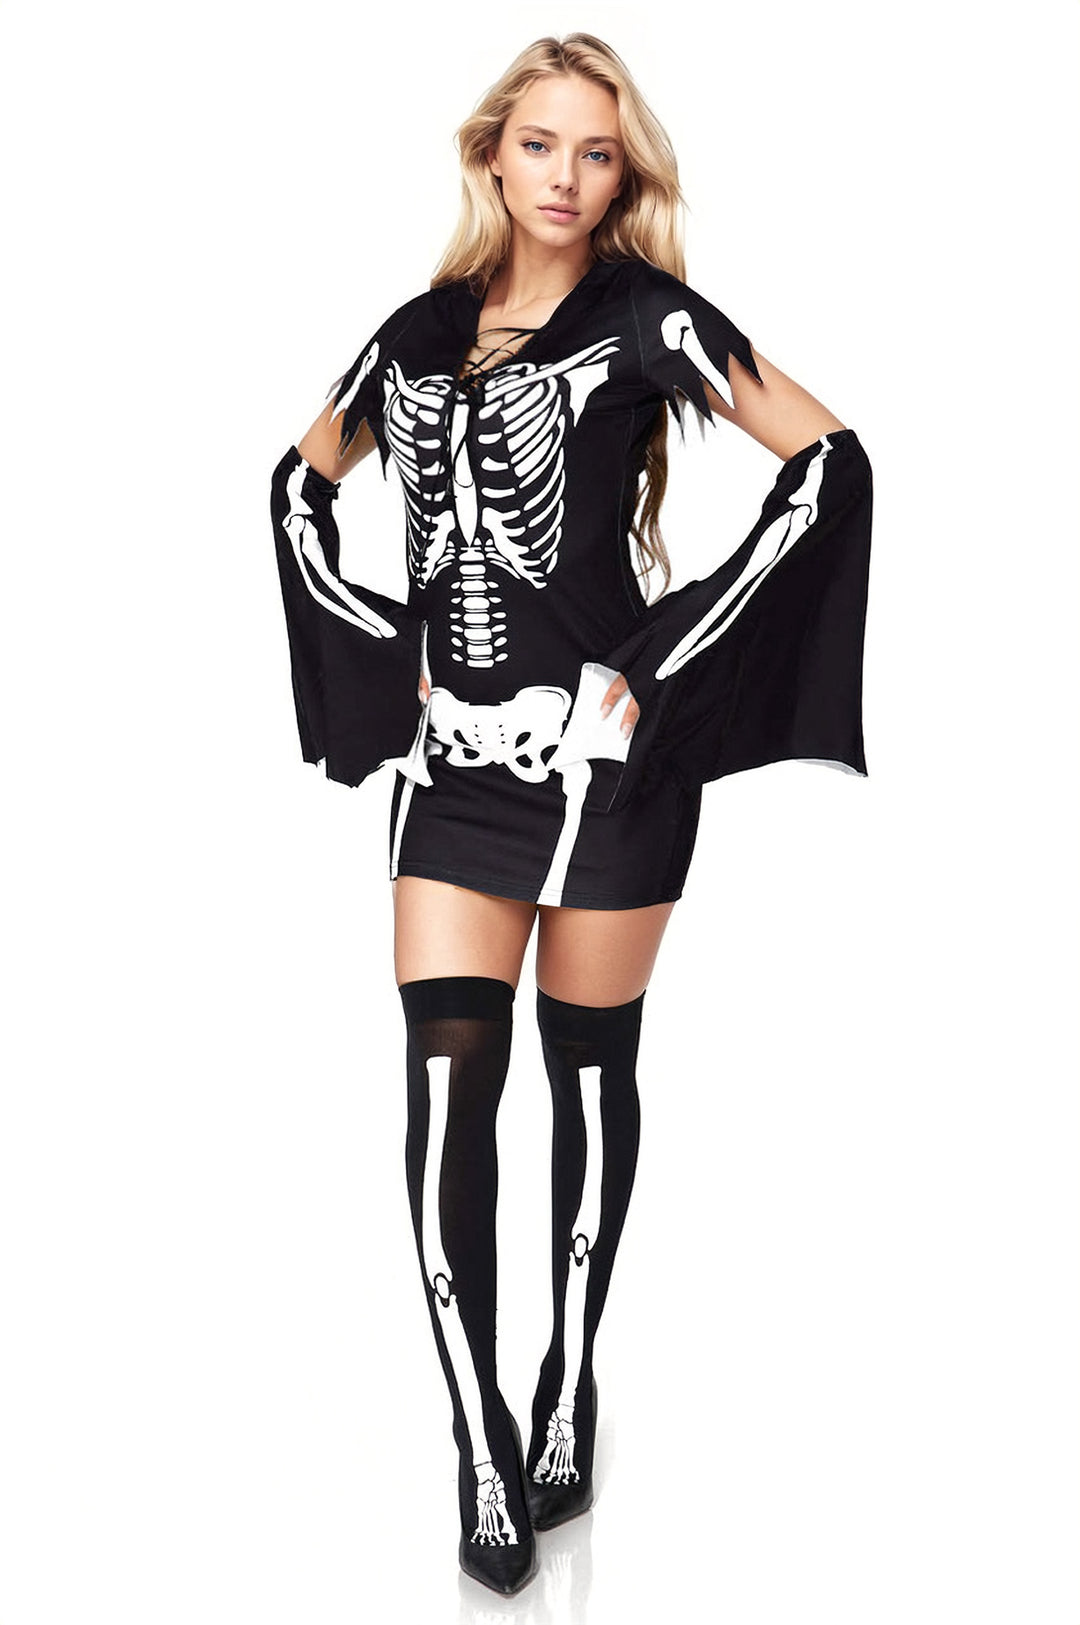 Haunting Skeleton Dress